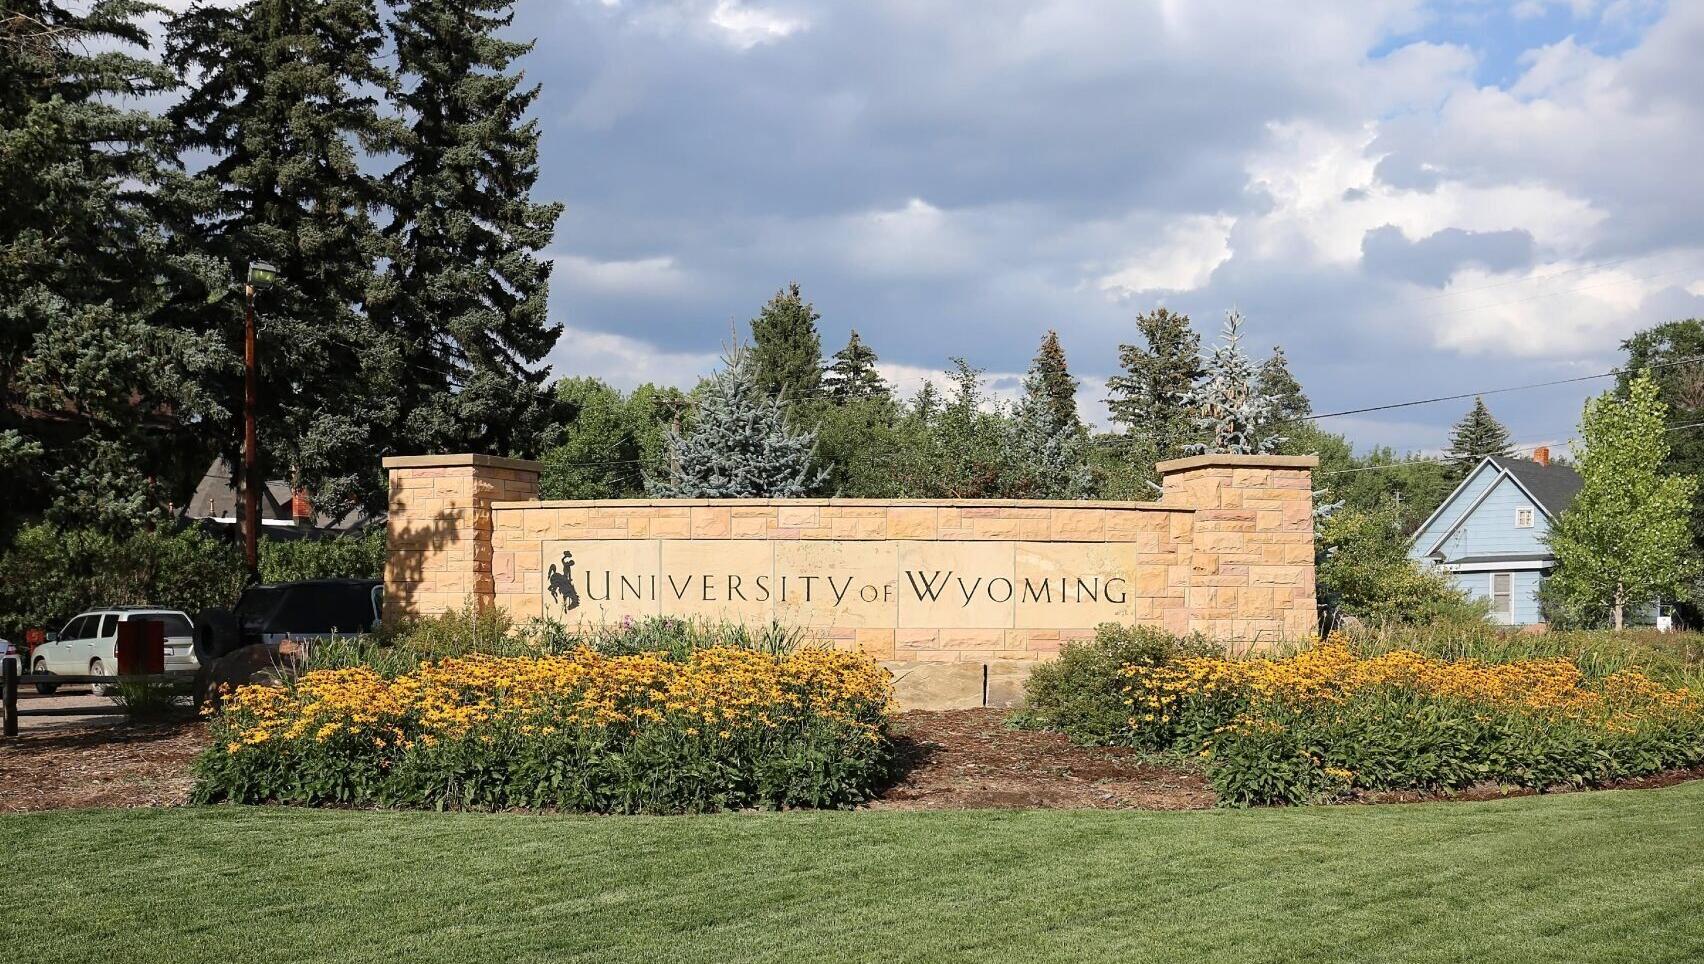 Gloeb receives master's degree from University of Wyoming